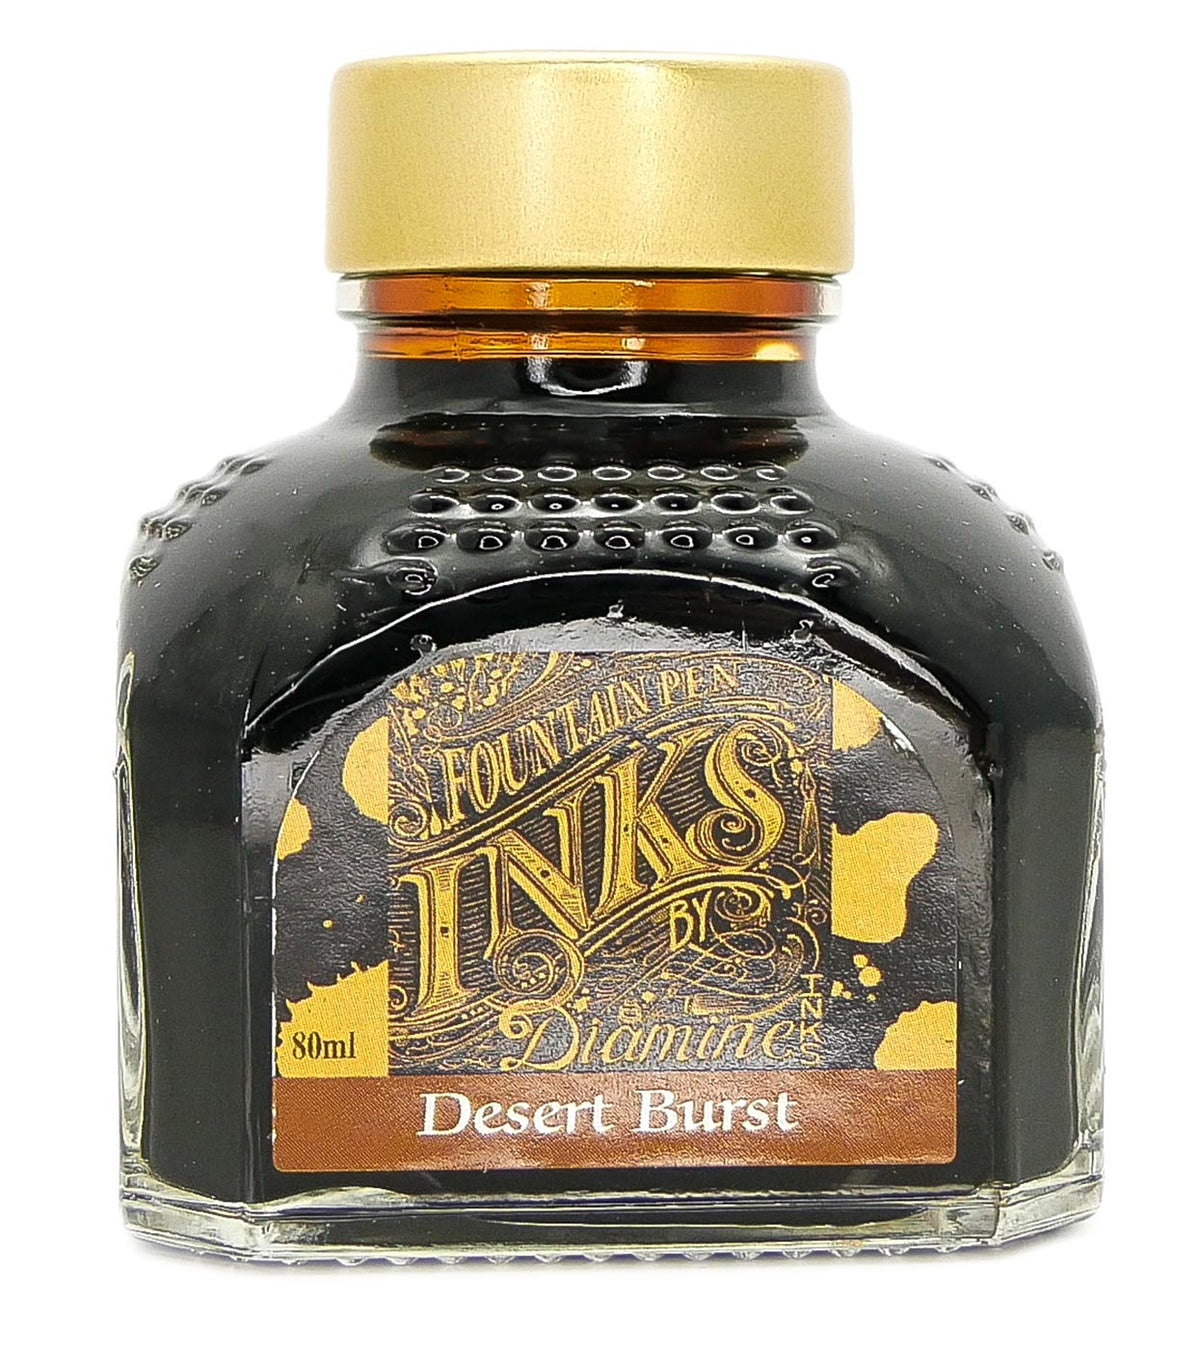 Diamine Desert Burst is a medium warm brown fountain pen ink available in a 90ml glass bottle.